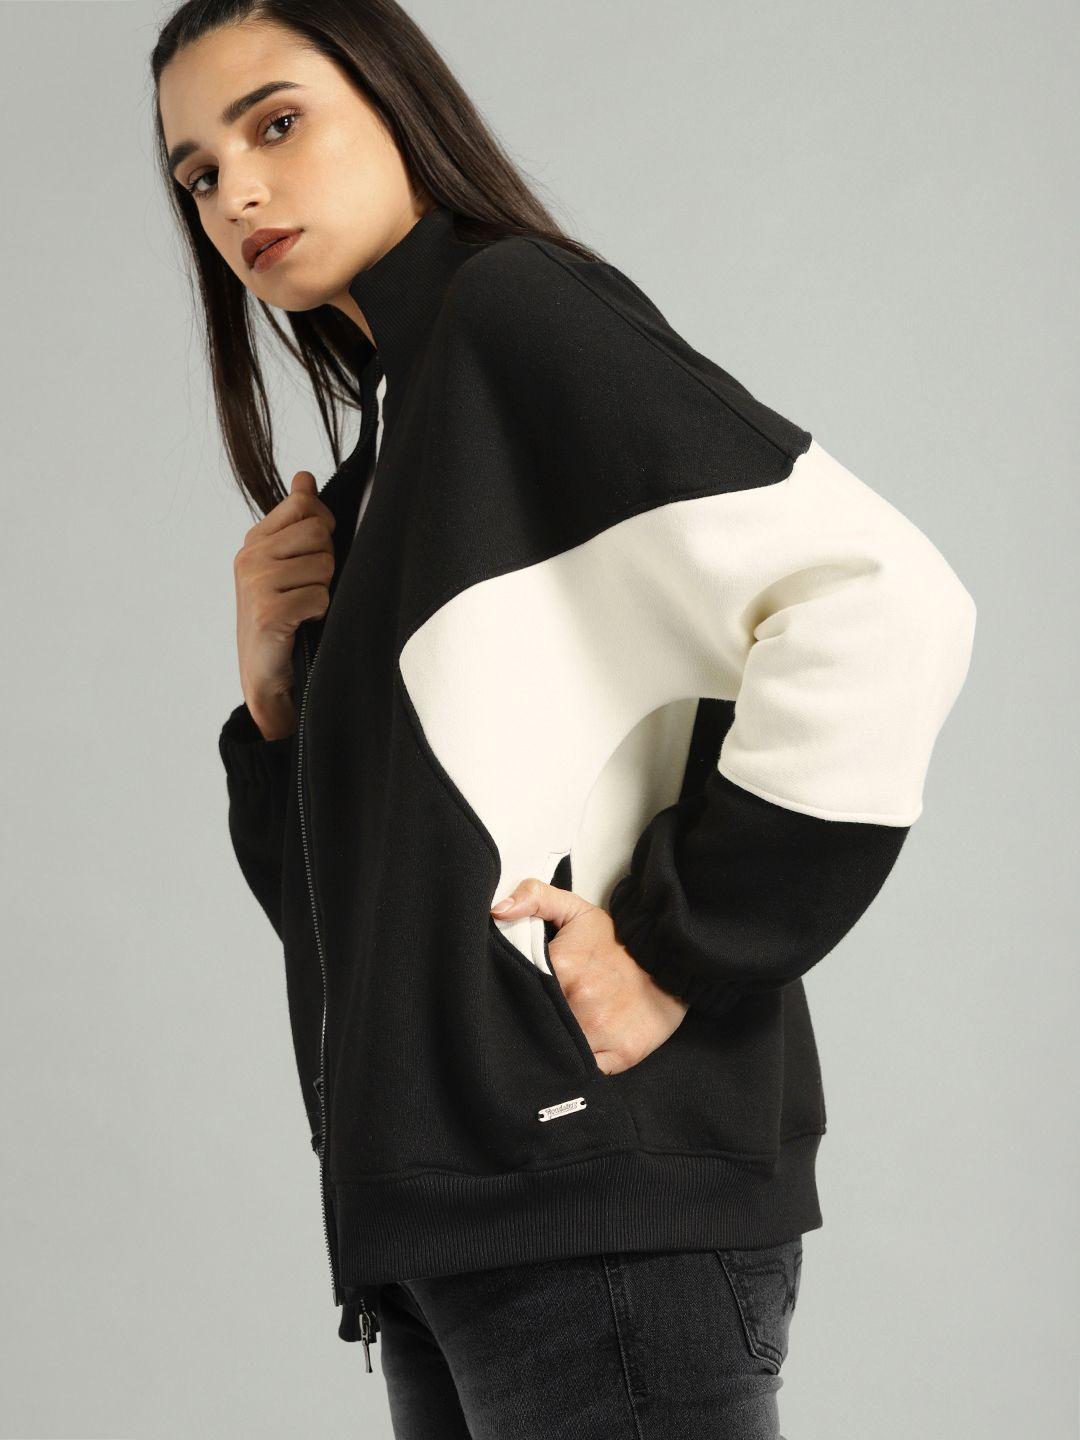 The Roadster Lifestyle Co Women Black & Off-White Colourblocked Sweatshirt